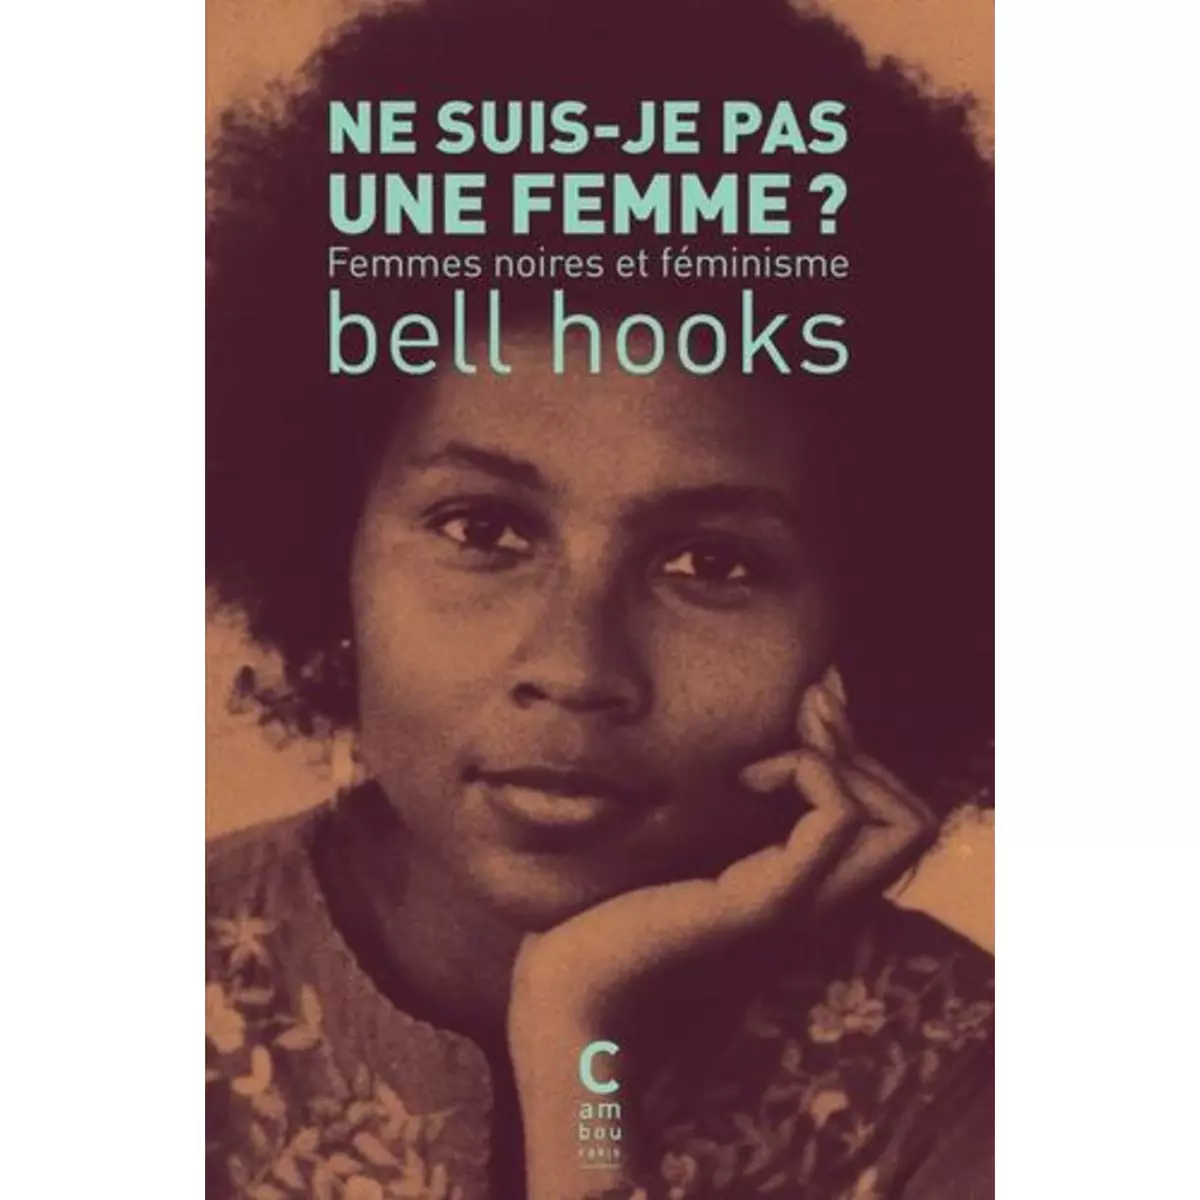  NE SUIS-JE PAS UNE FEMME ? FEMMES NOIRES ET FEMINISME, Hooks Bell